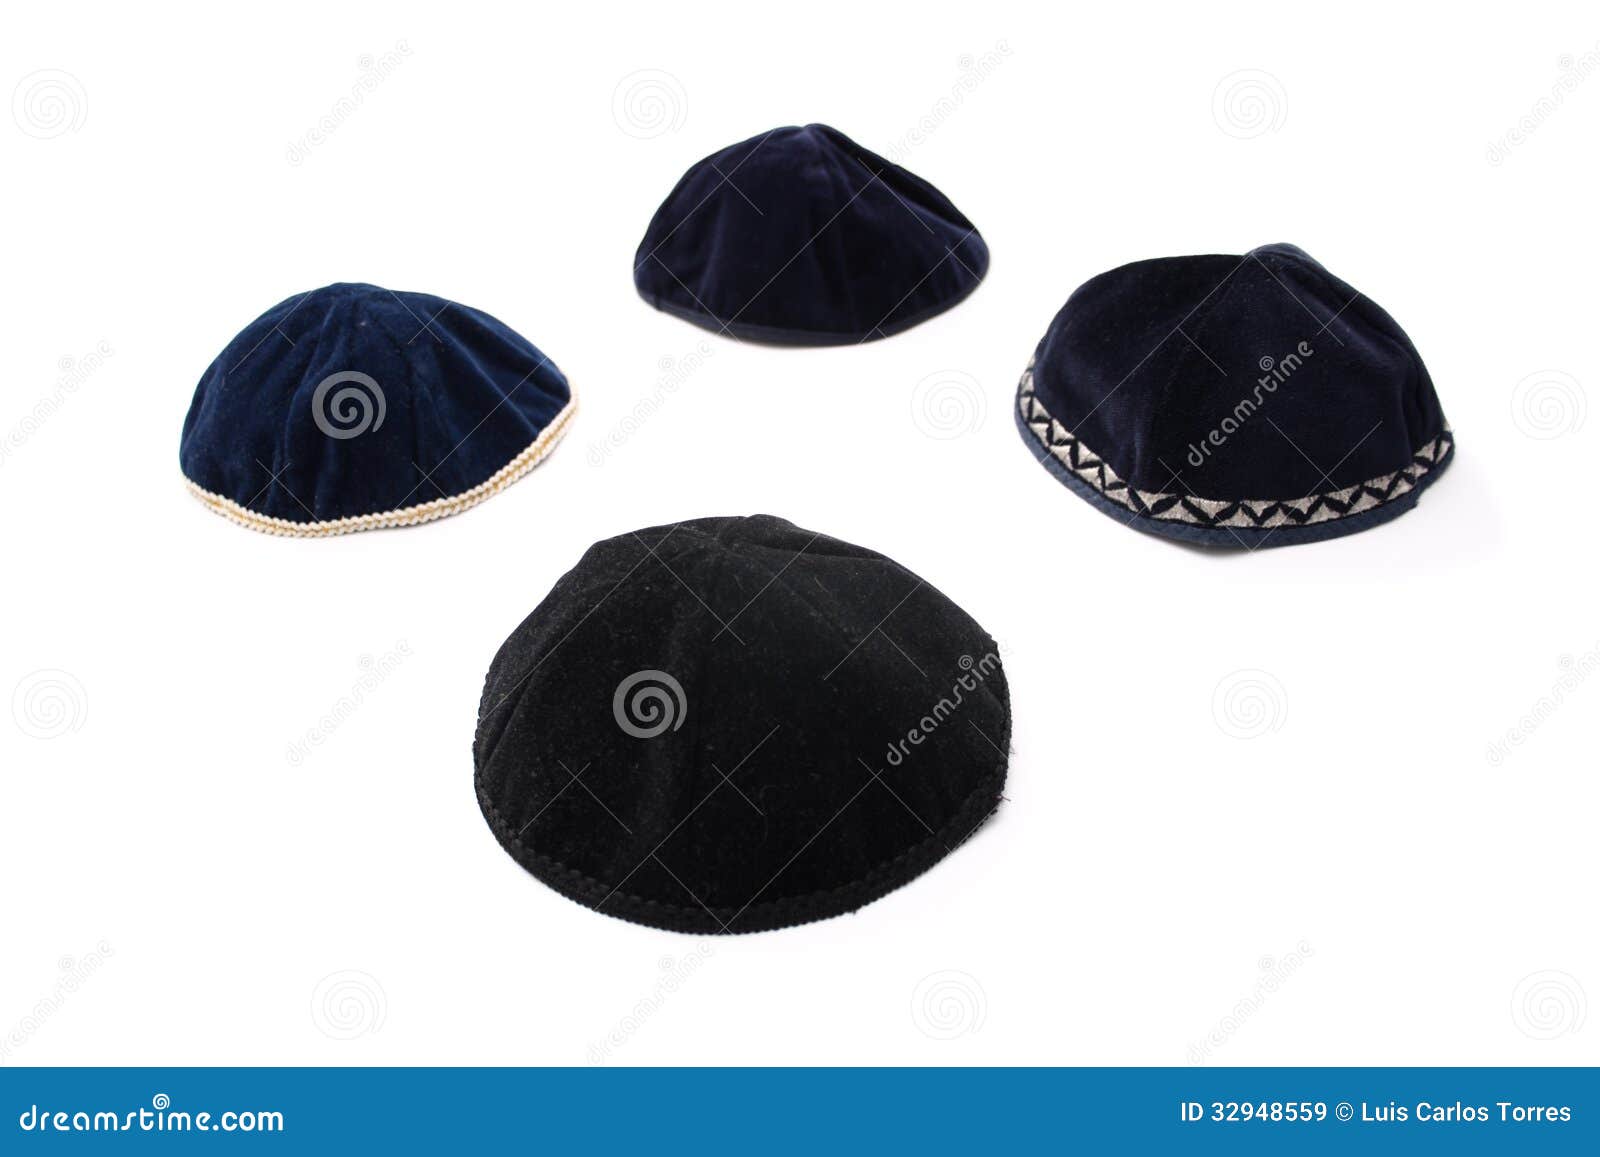 kippah-group-small-cap-head-covering-thin-slightly-rounded-skullcap-traditionally-worn-observant-jewish-men-32948559.jpg